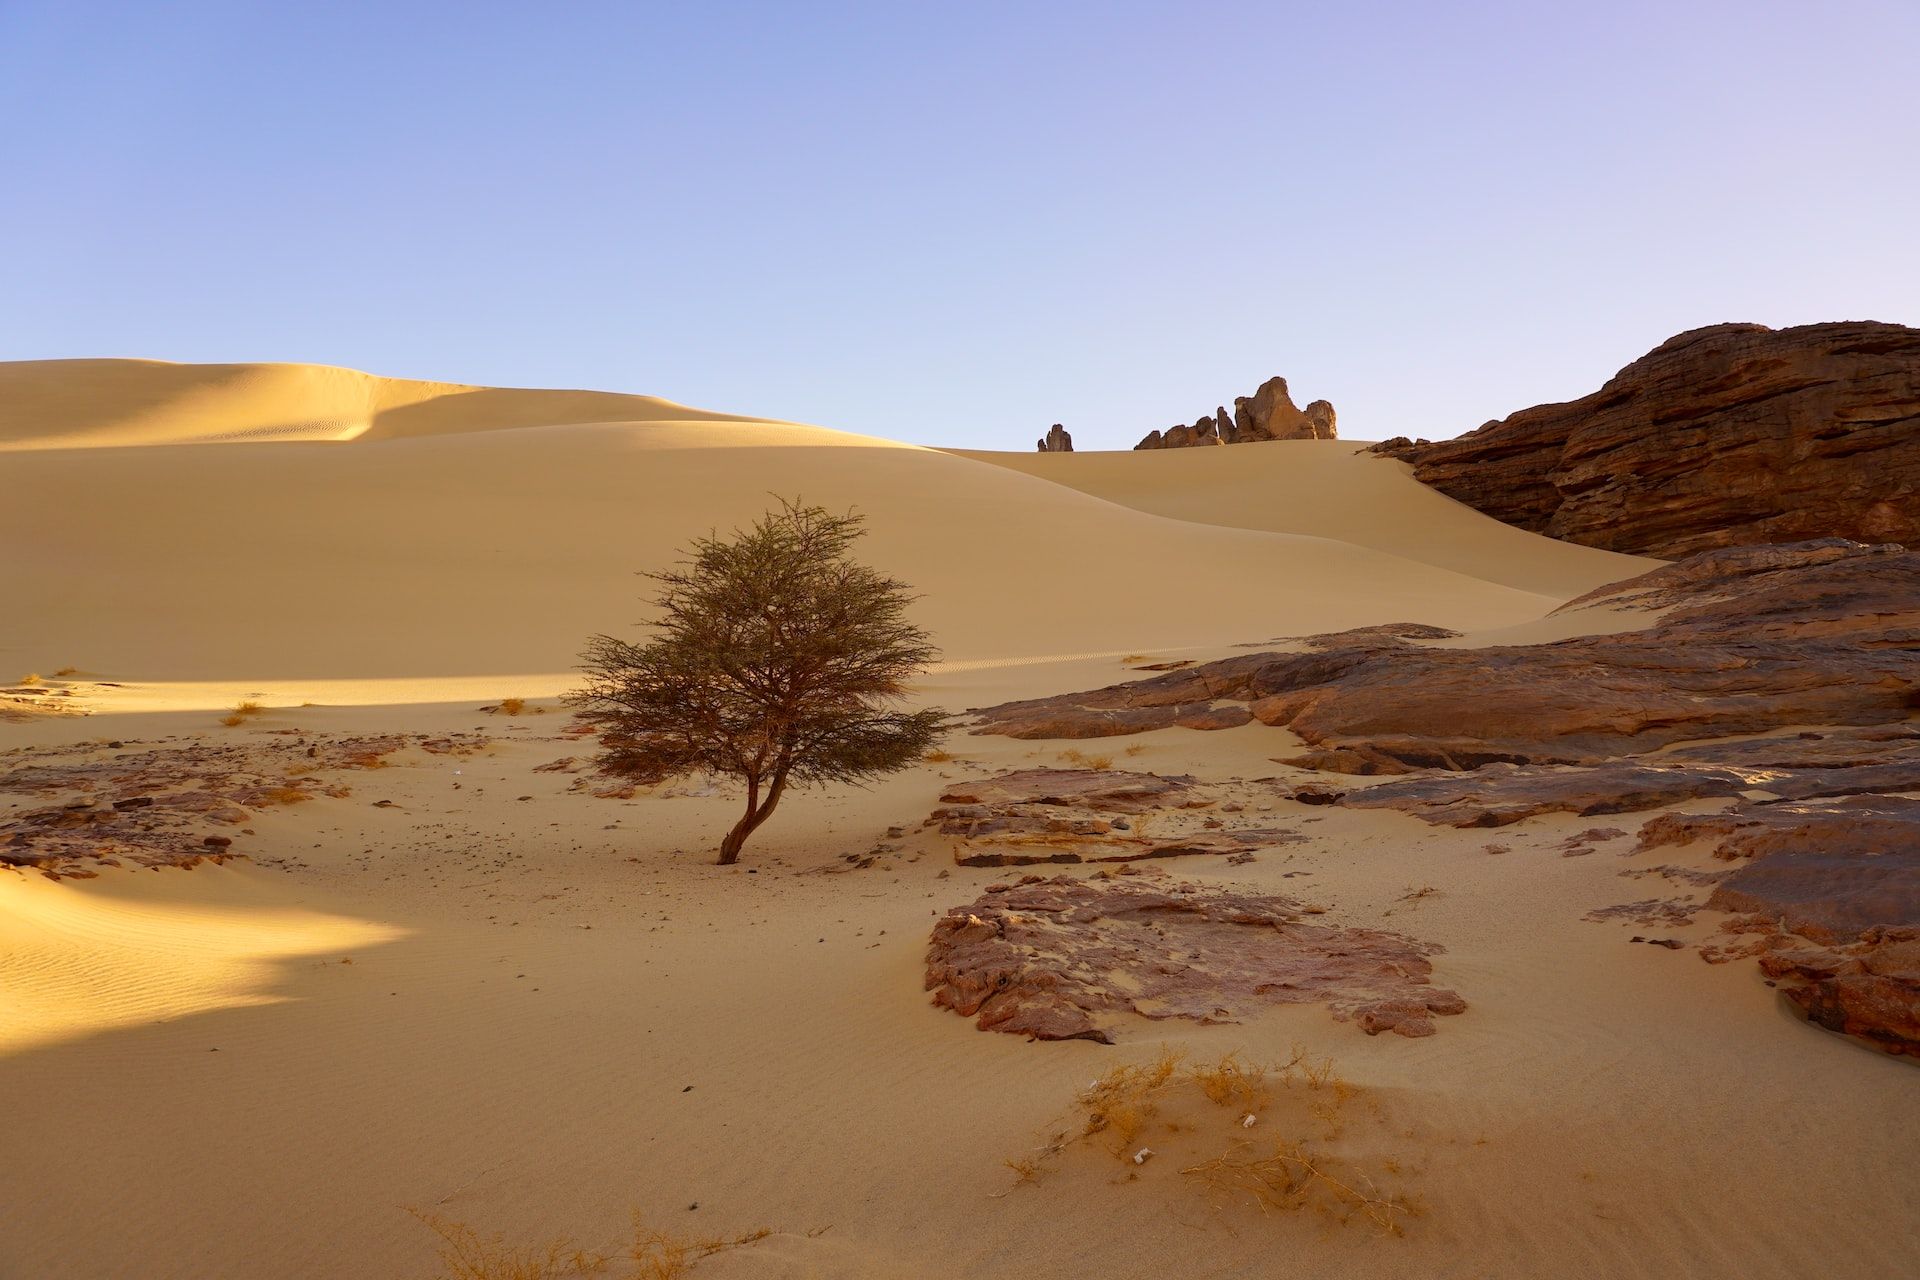 Landscape photograph of a desert